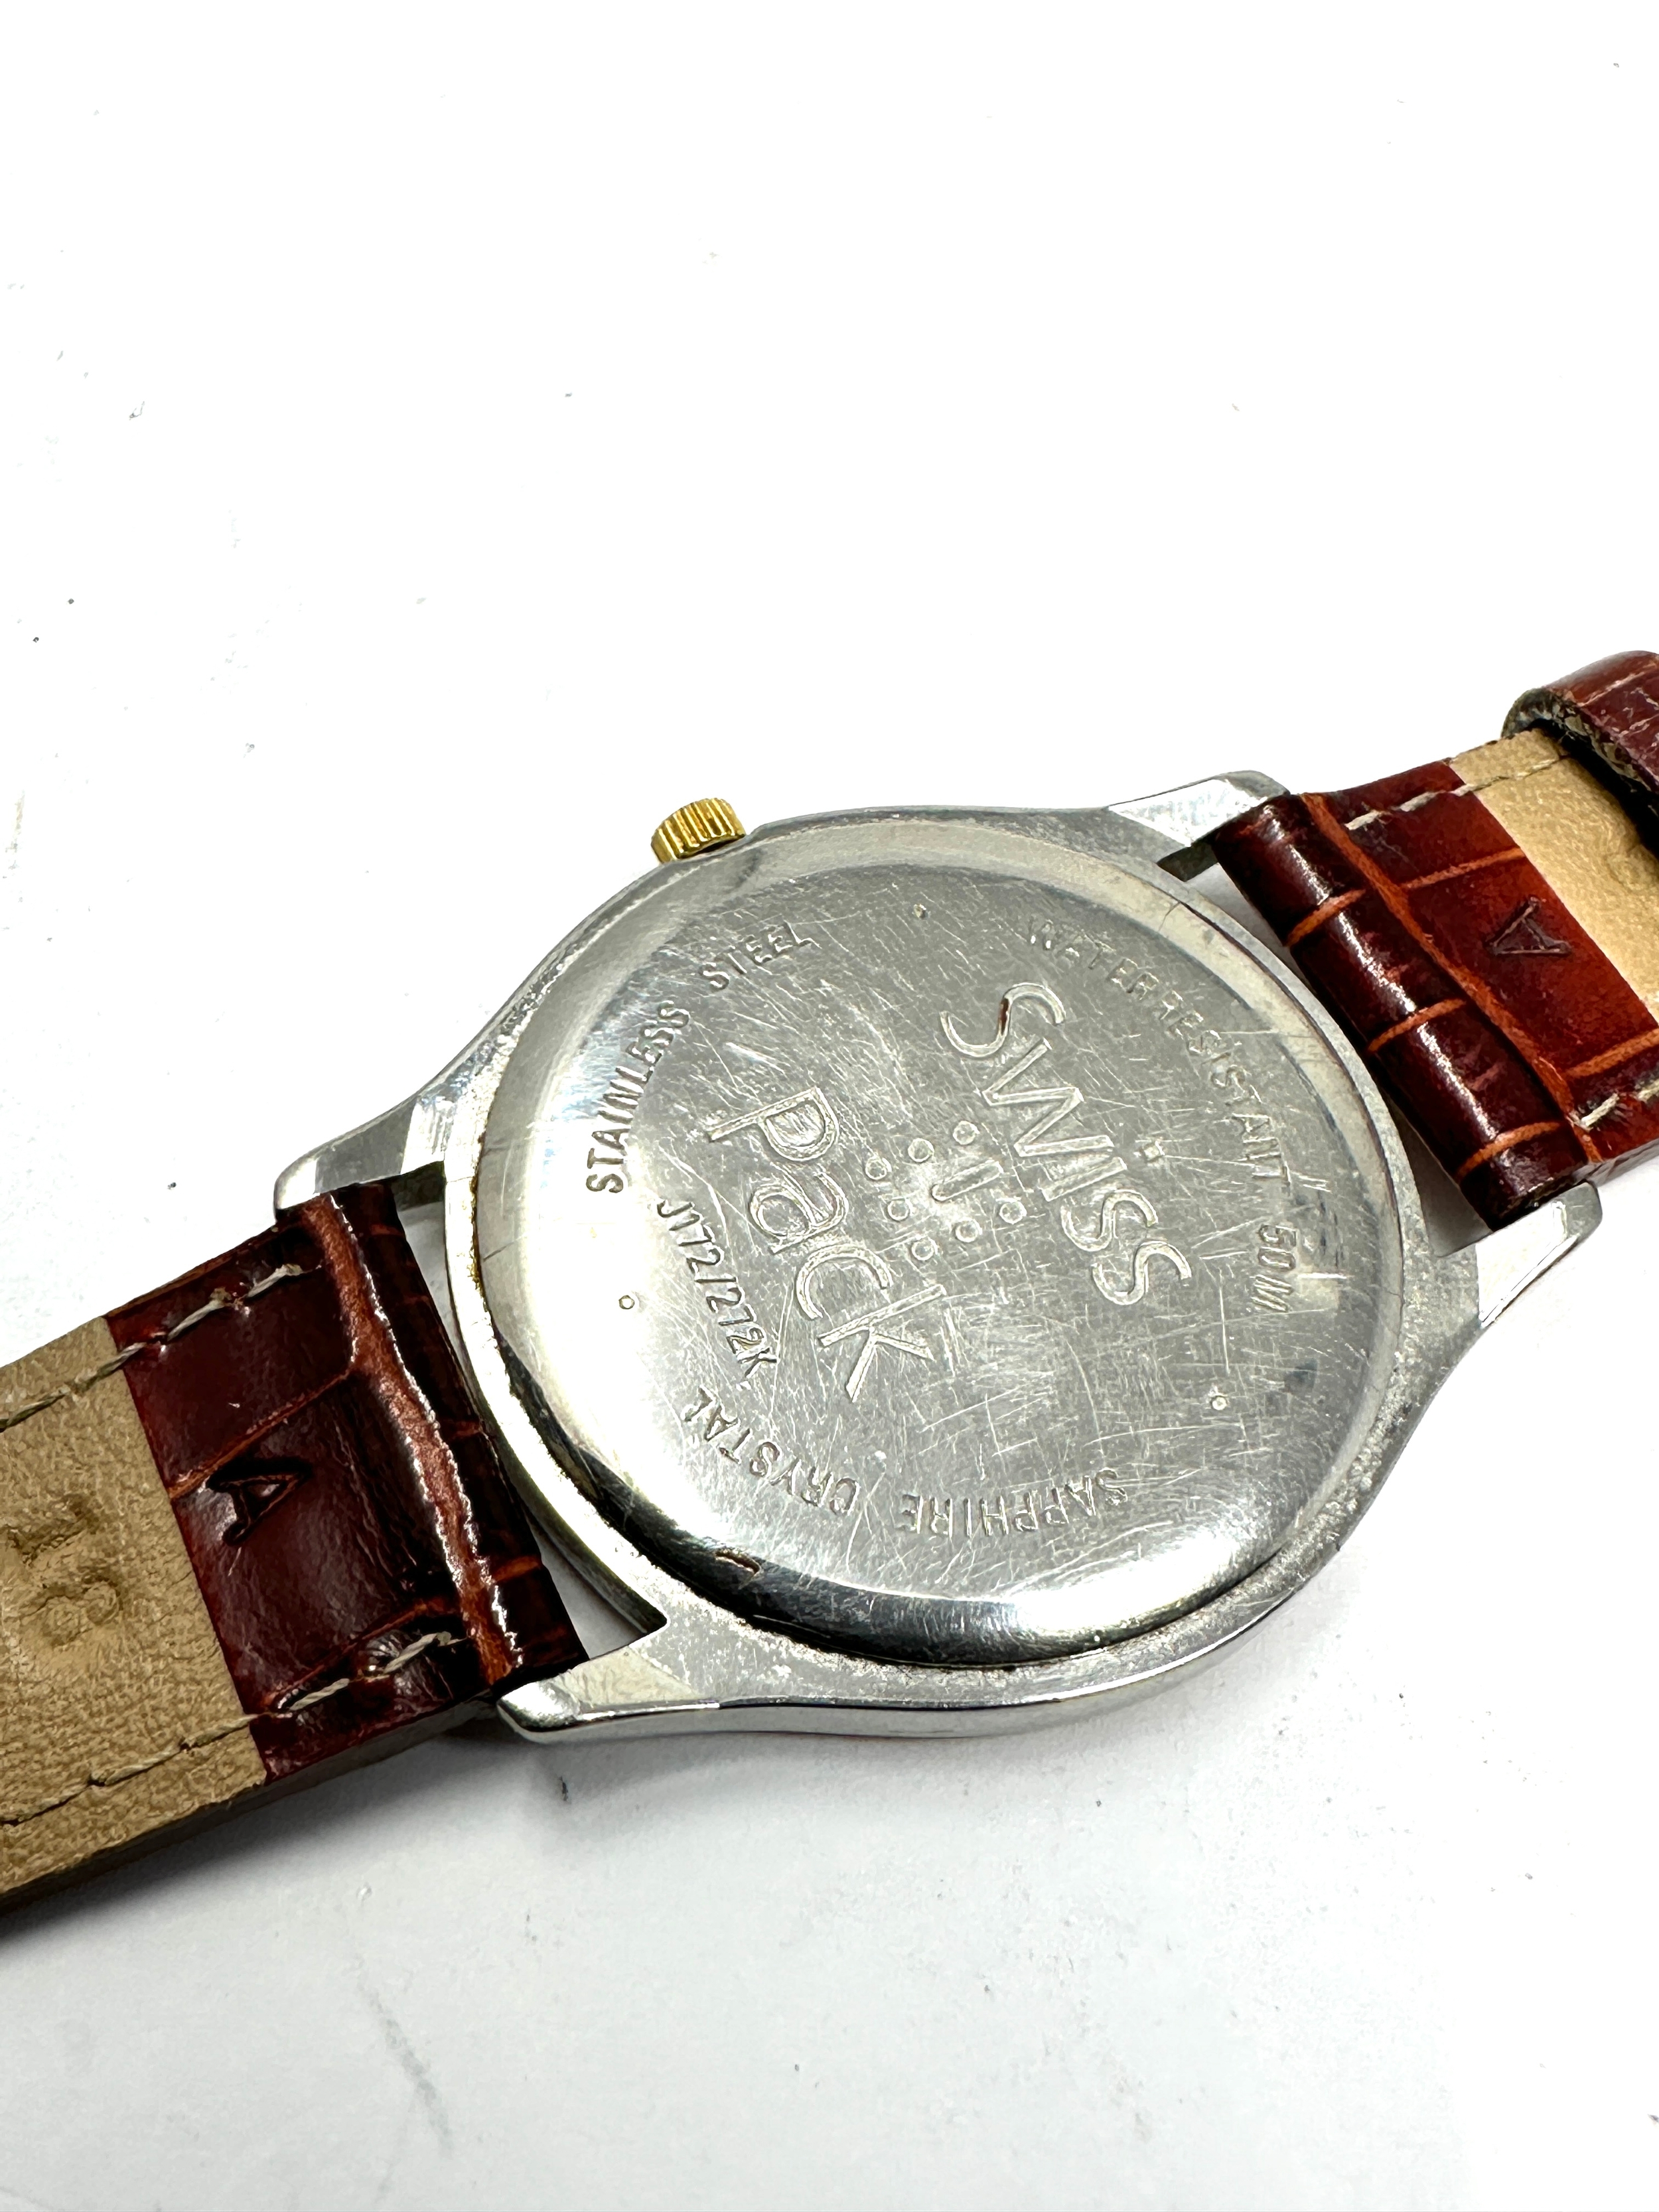 Gents quartz tissot pr 50 wristwatch the watch is ticking - Image 3 of 4